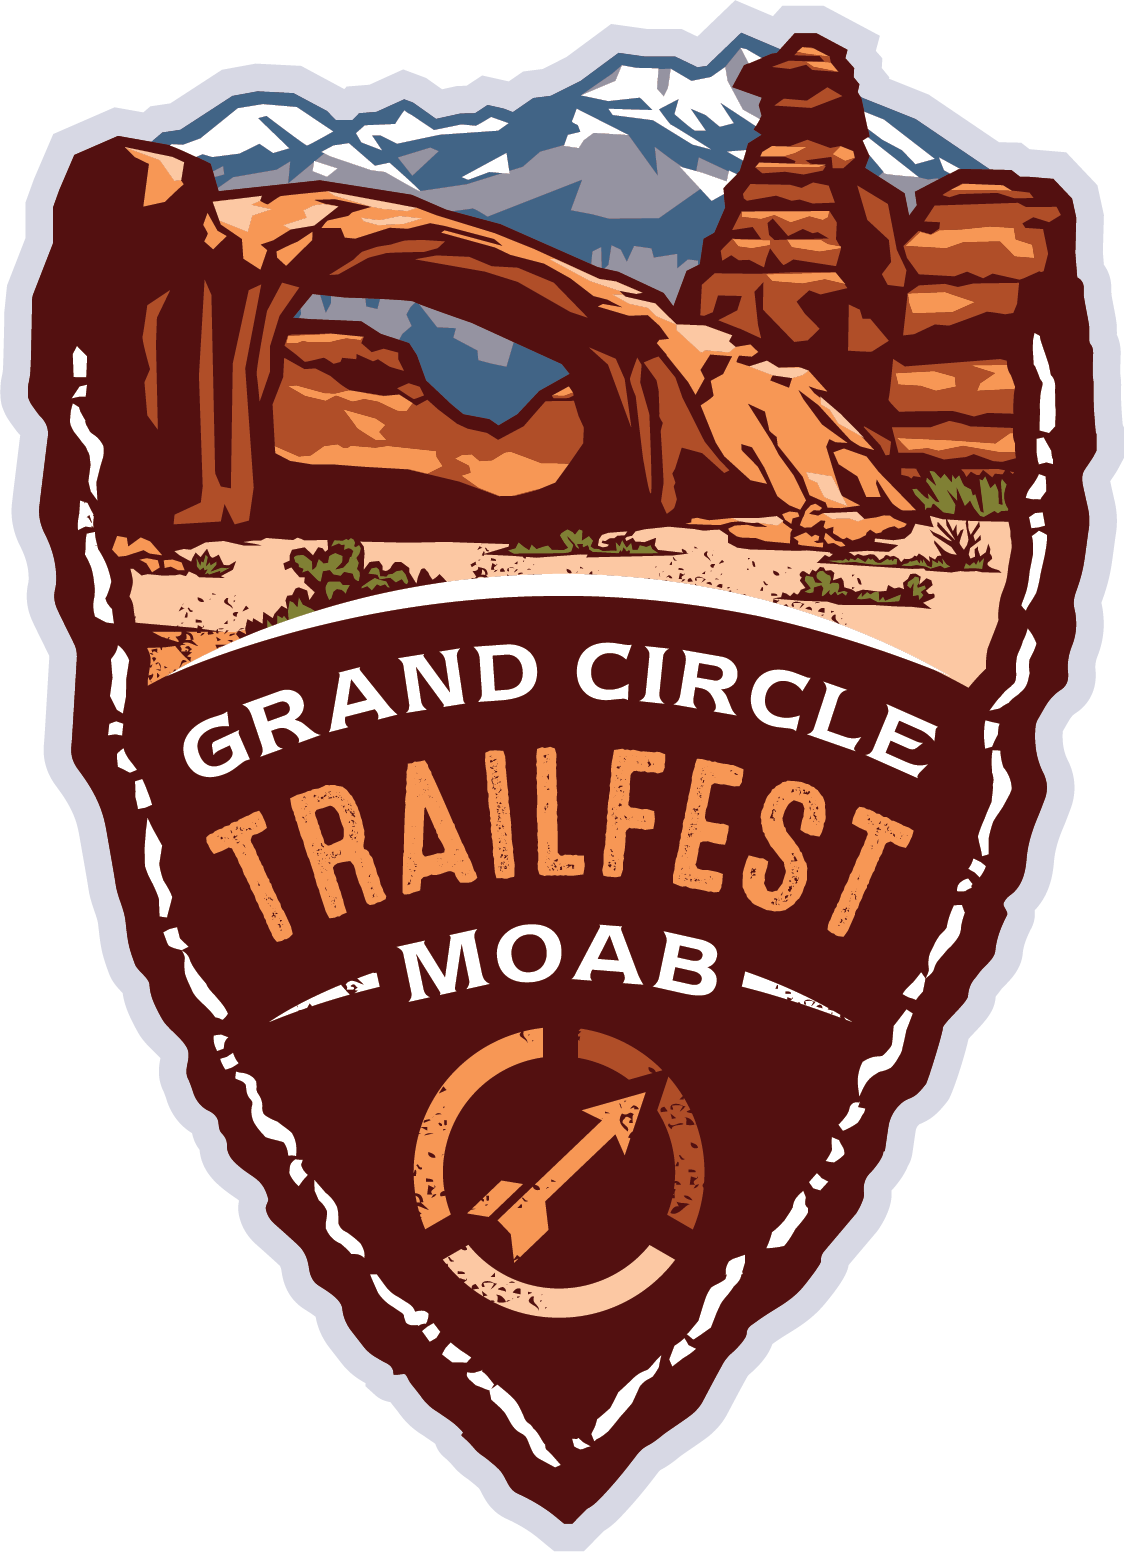 Grand Circle Trailfest: Moab logo on RaceRaves